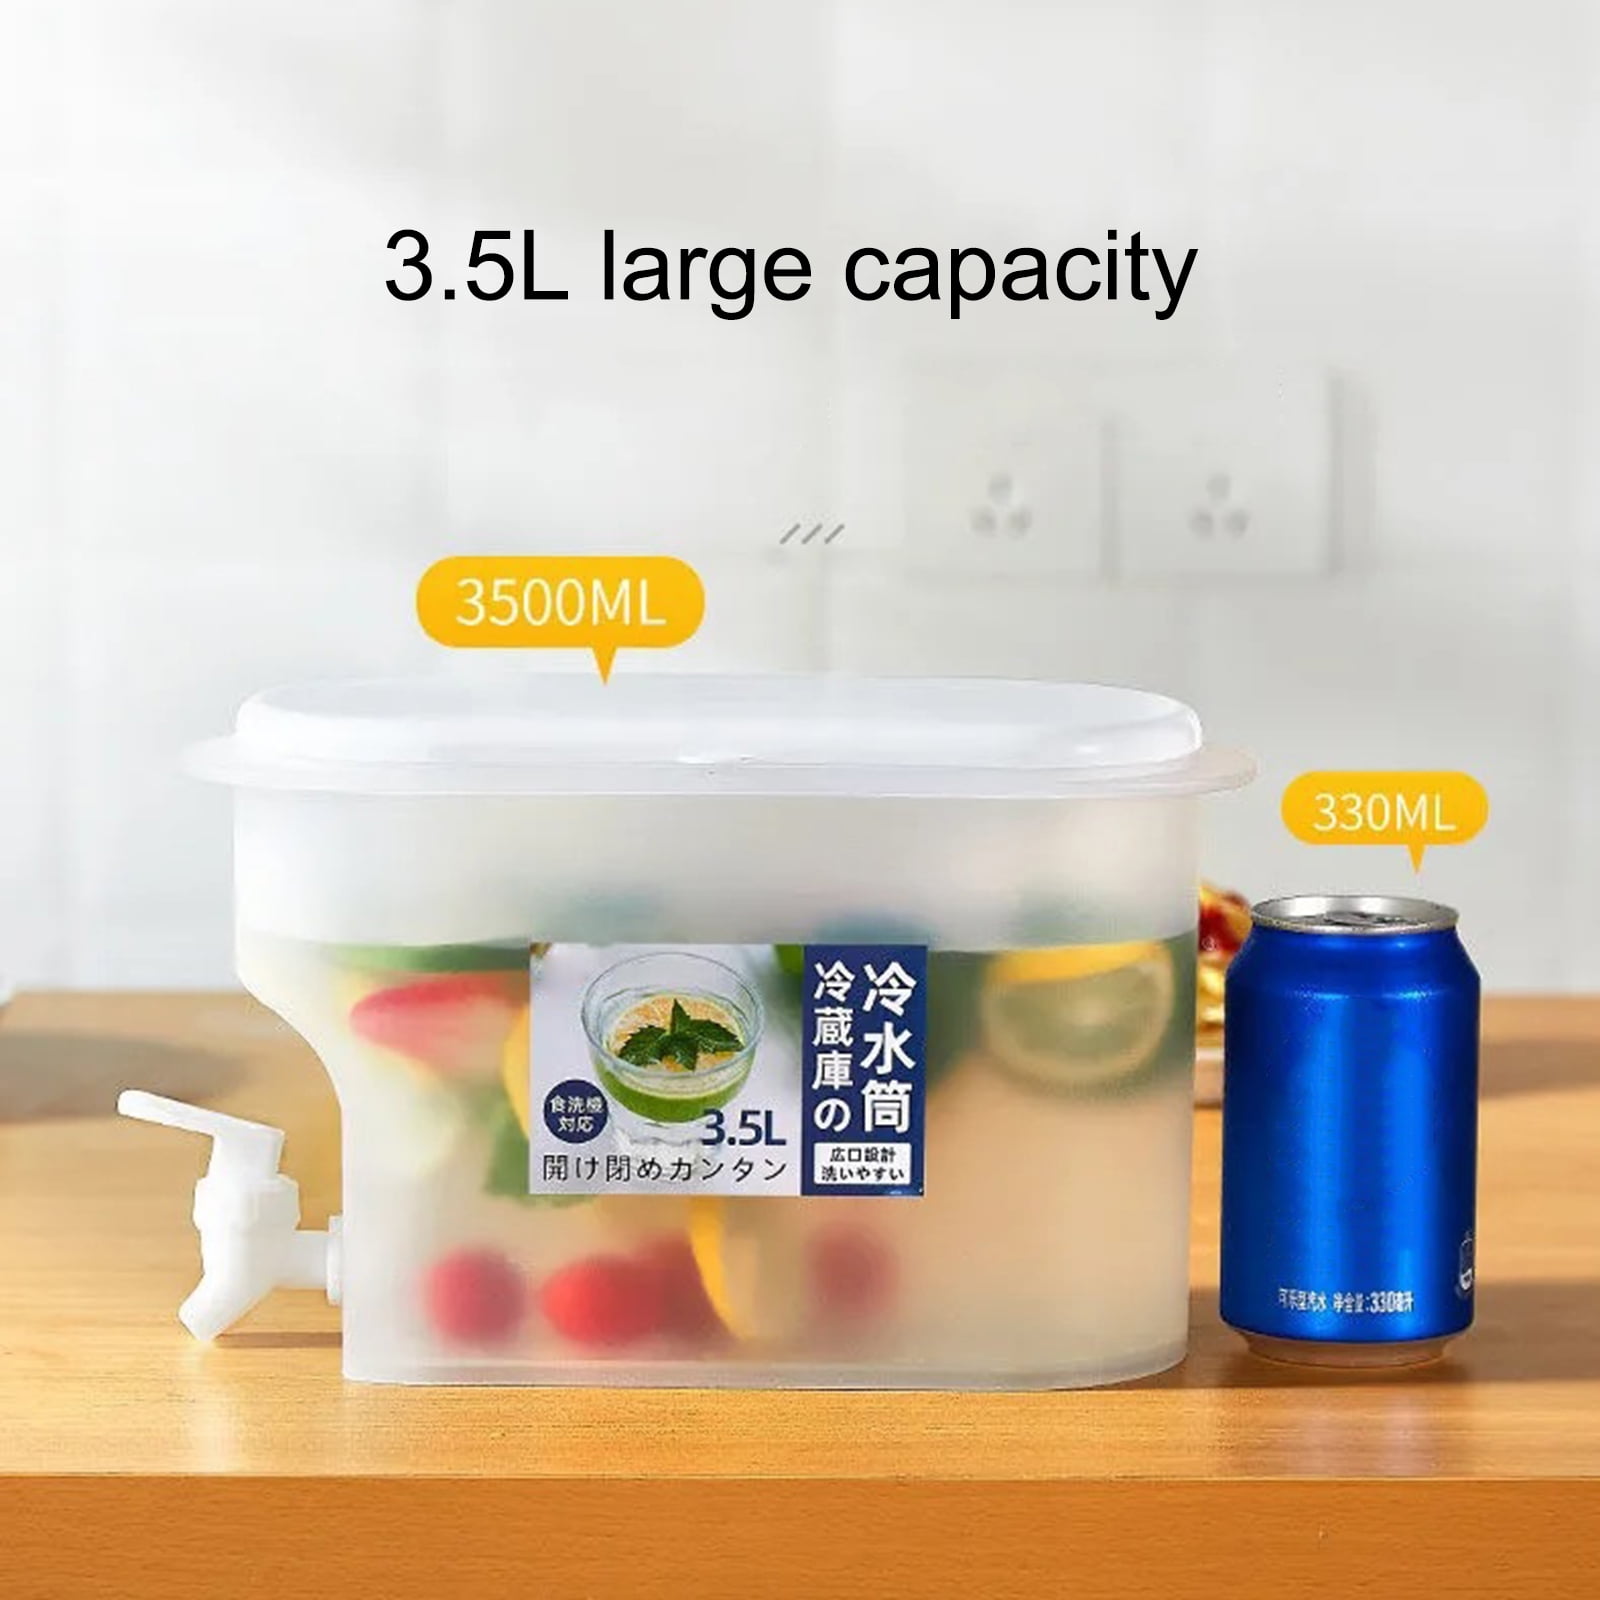 Elsjoy 2 Pack Plastic Drink Dispenser with Spigot, 1 Gallon (3.5 L)  Beverage Dispenser Cold Drink Container for Iced Tea, Lemonade, Fridge,  Bar